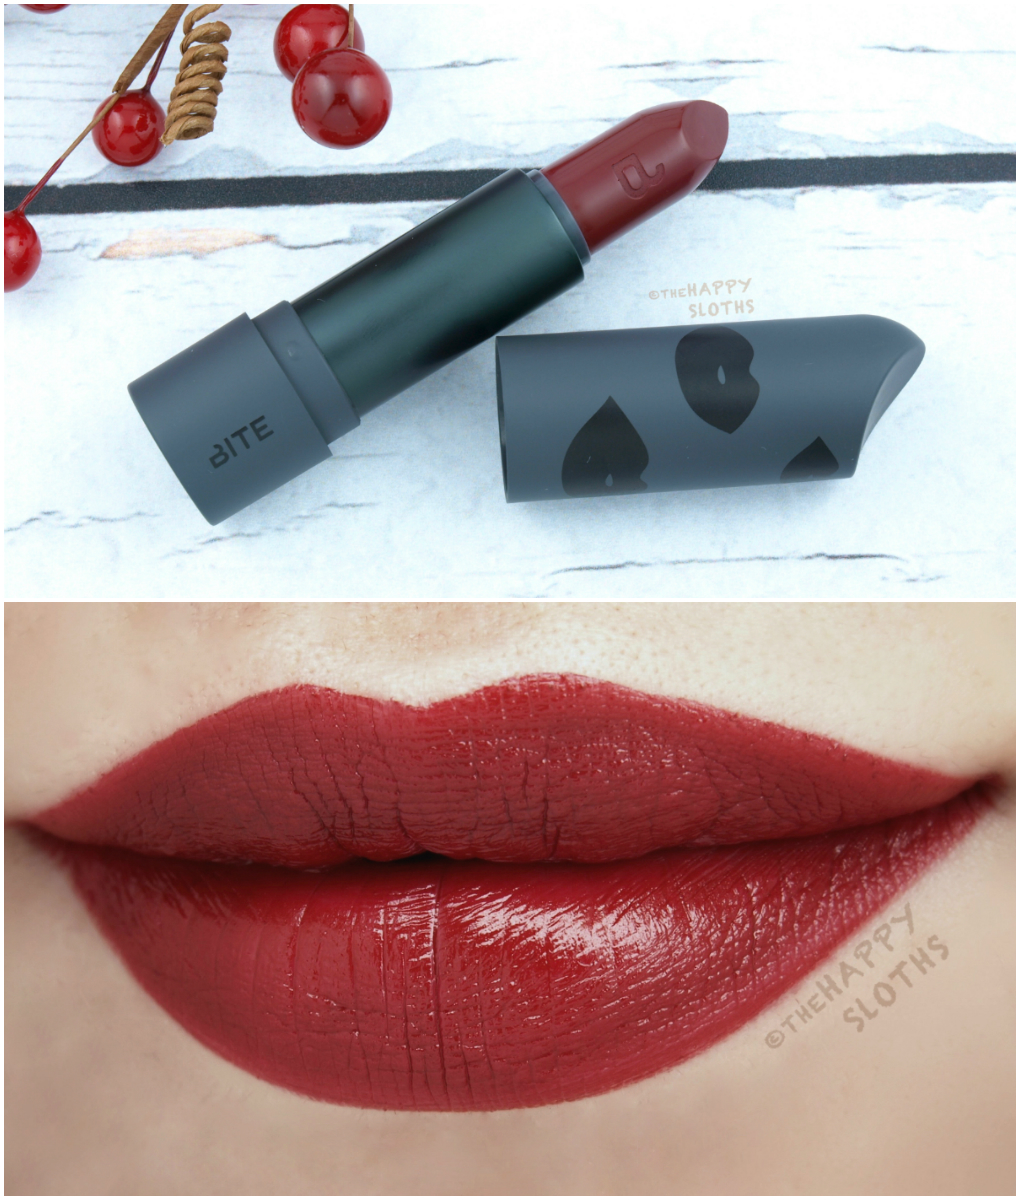 Bite Mistletoe Amuse Bouche Lipstick Review and Swatches